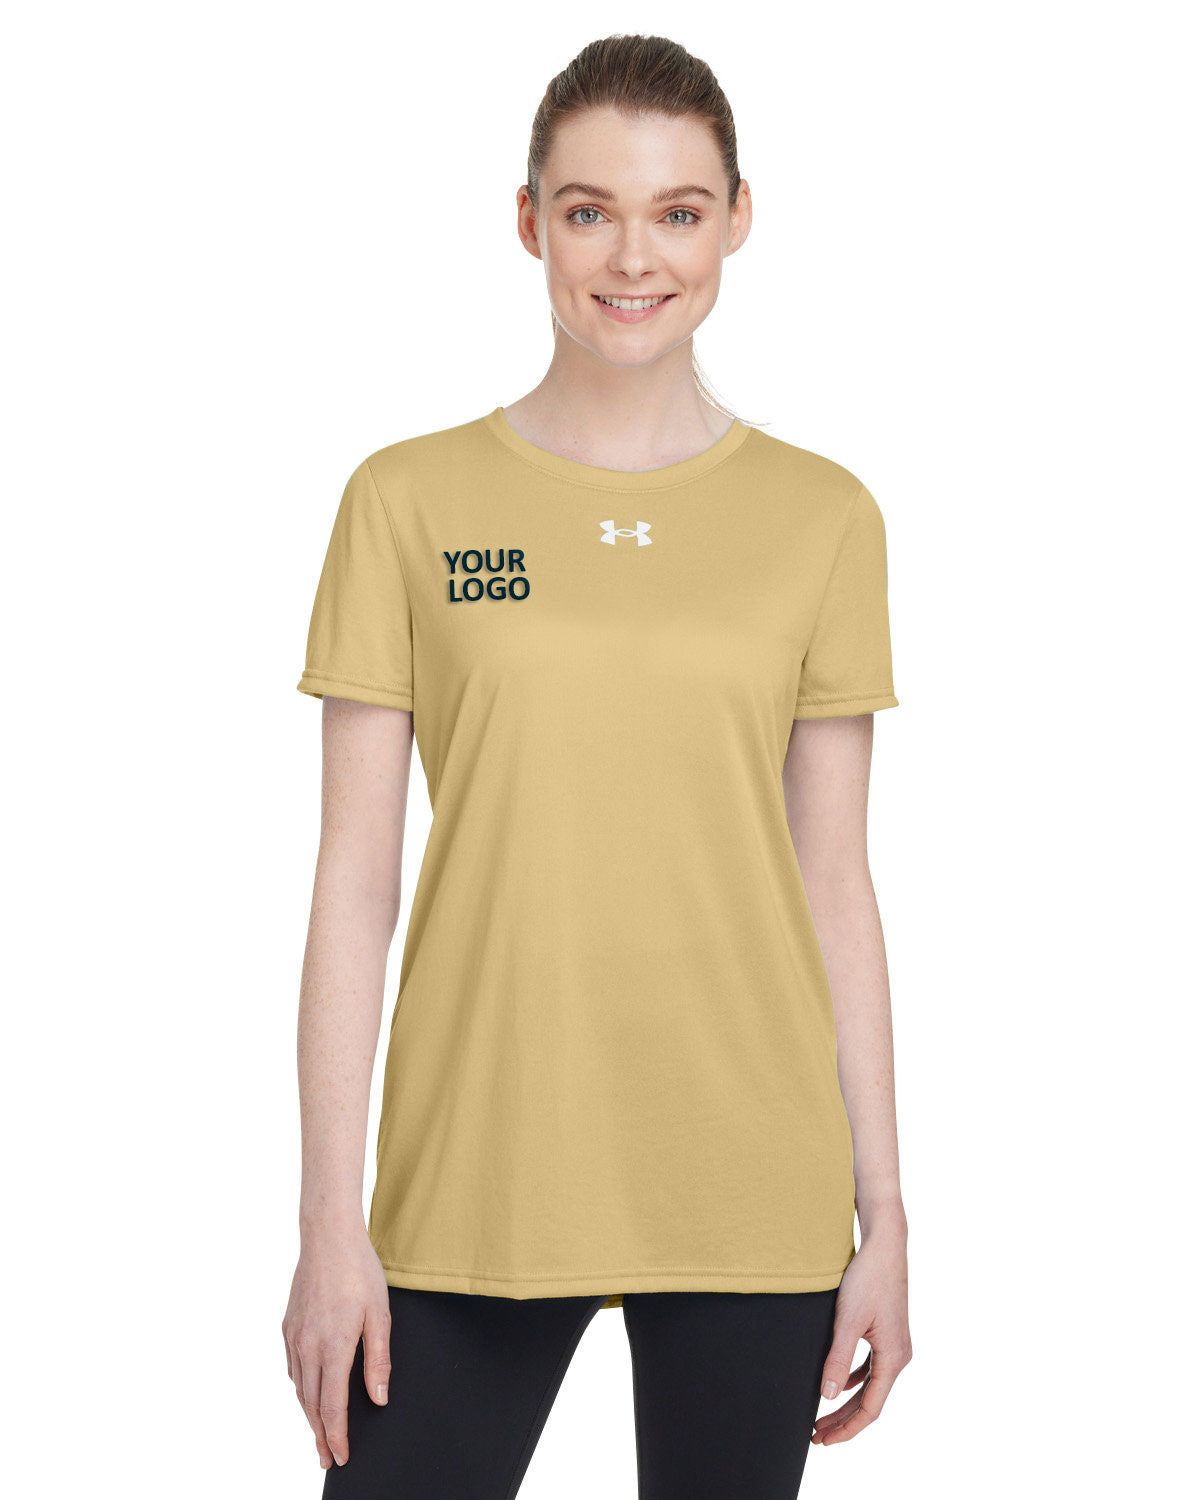 Under Armour Ladies Tech Customized T-Shirts, Vegas Gold